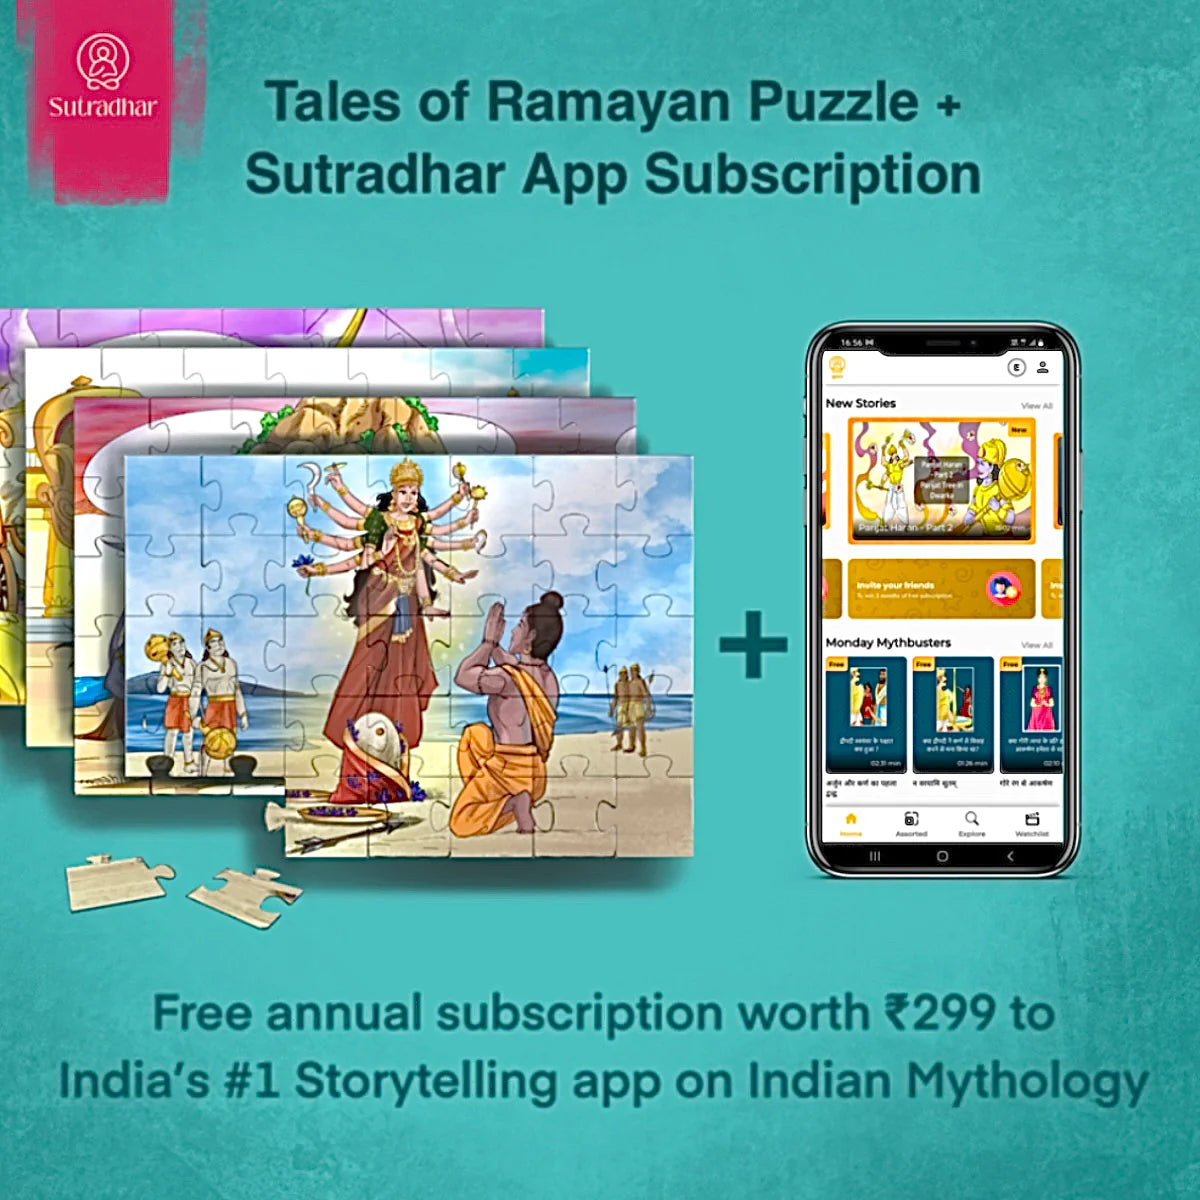 Ramayan Jigsaw Puzzle - (Combo of 10) - Ravan Vadh and Sanjivani